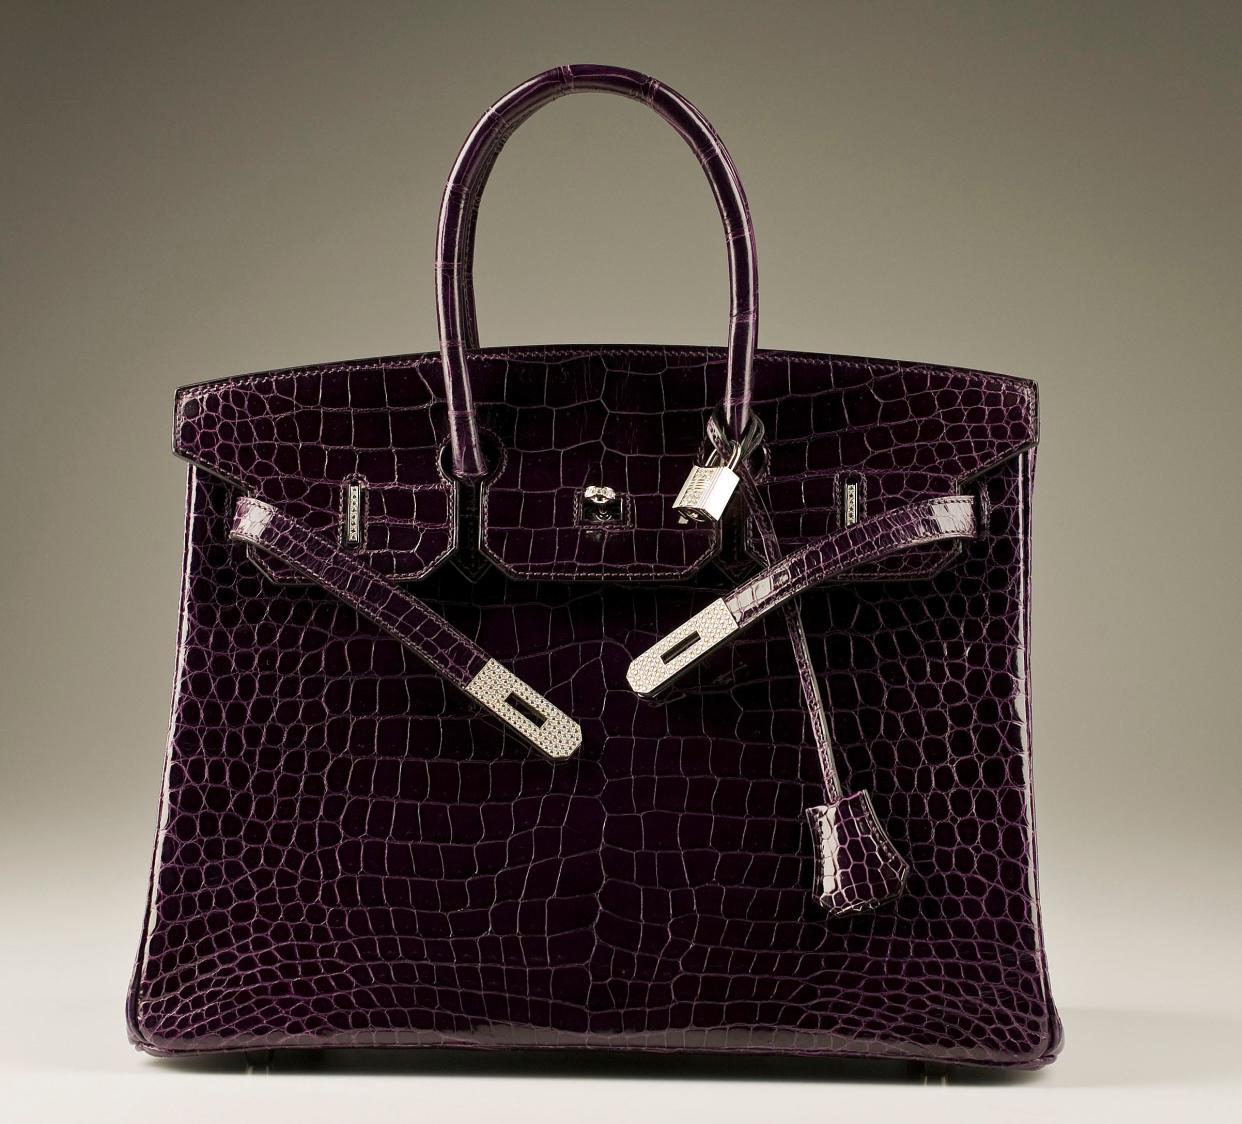 A Hermes Birkin handbag with 8.2 carats of diamonds on the bag bag and 1.64 carats of diamonds on the padlock.